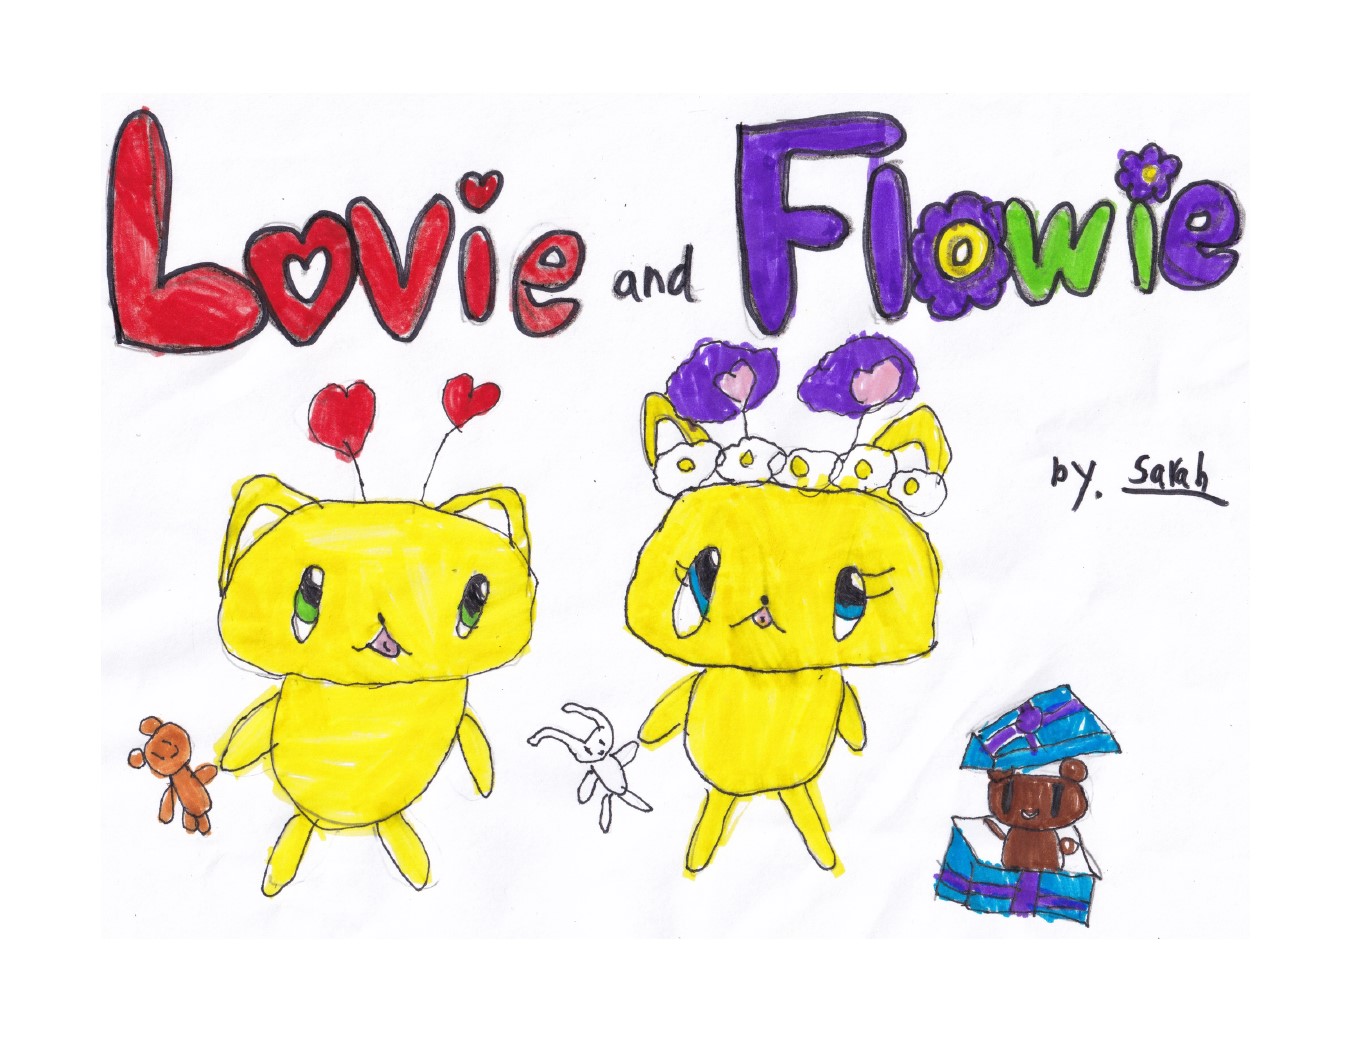 Lovie and Flowie by Sarah M.